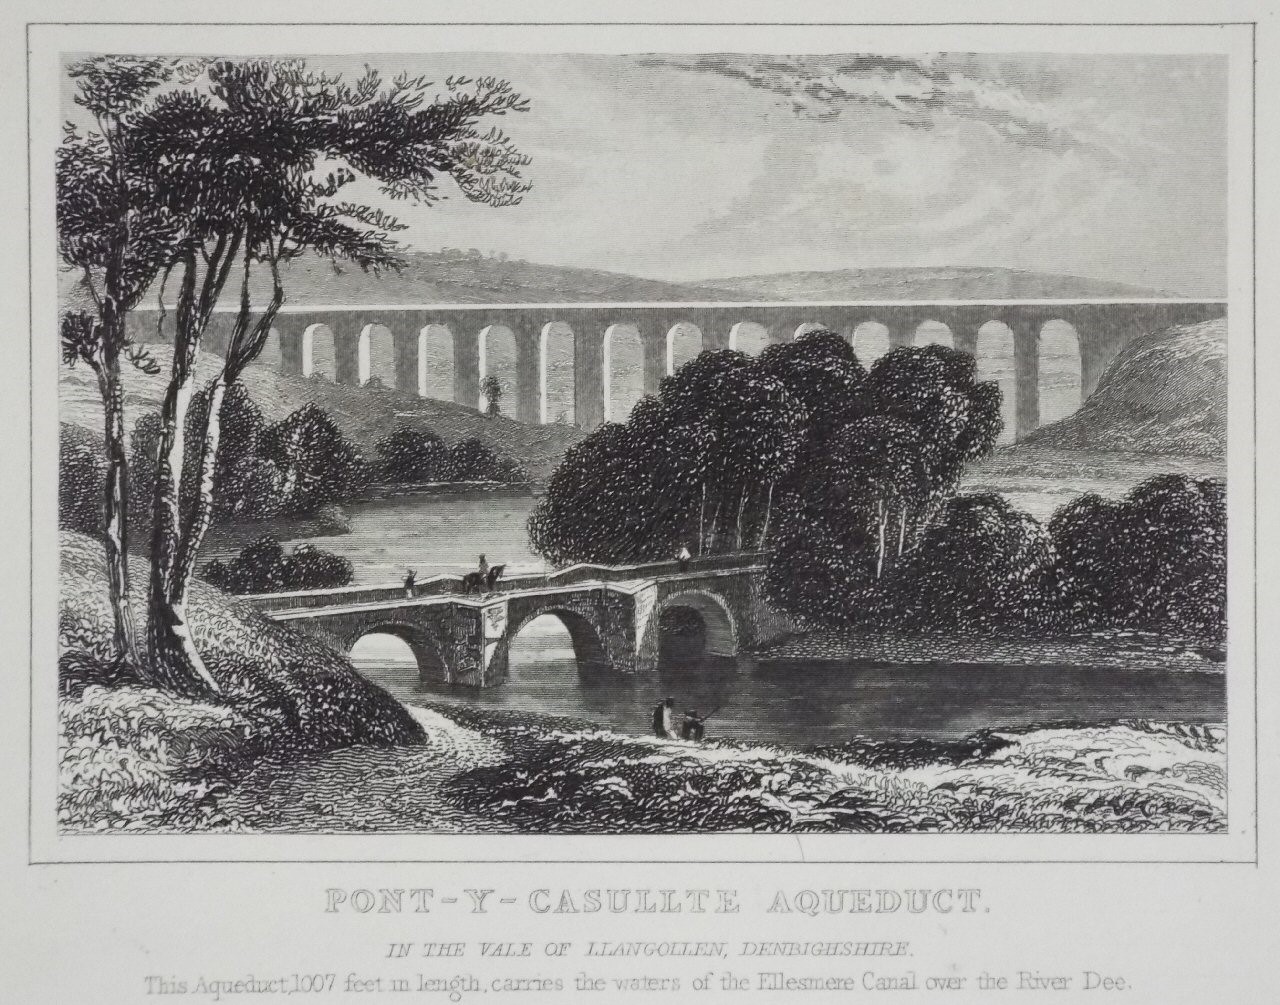 Print - Pont-Y-Casullte Aqueduct, in the Vale of Llangollen, Denbighshire.